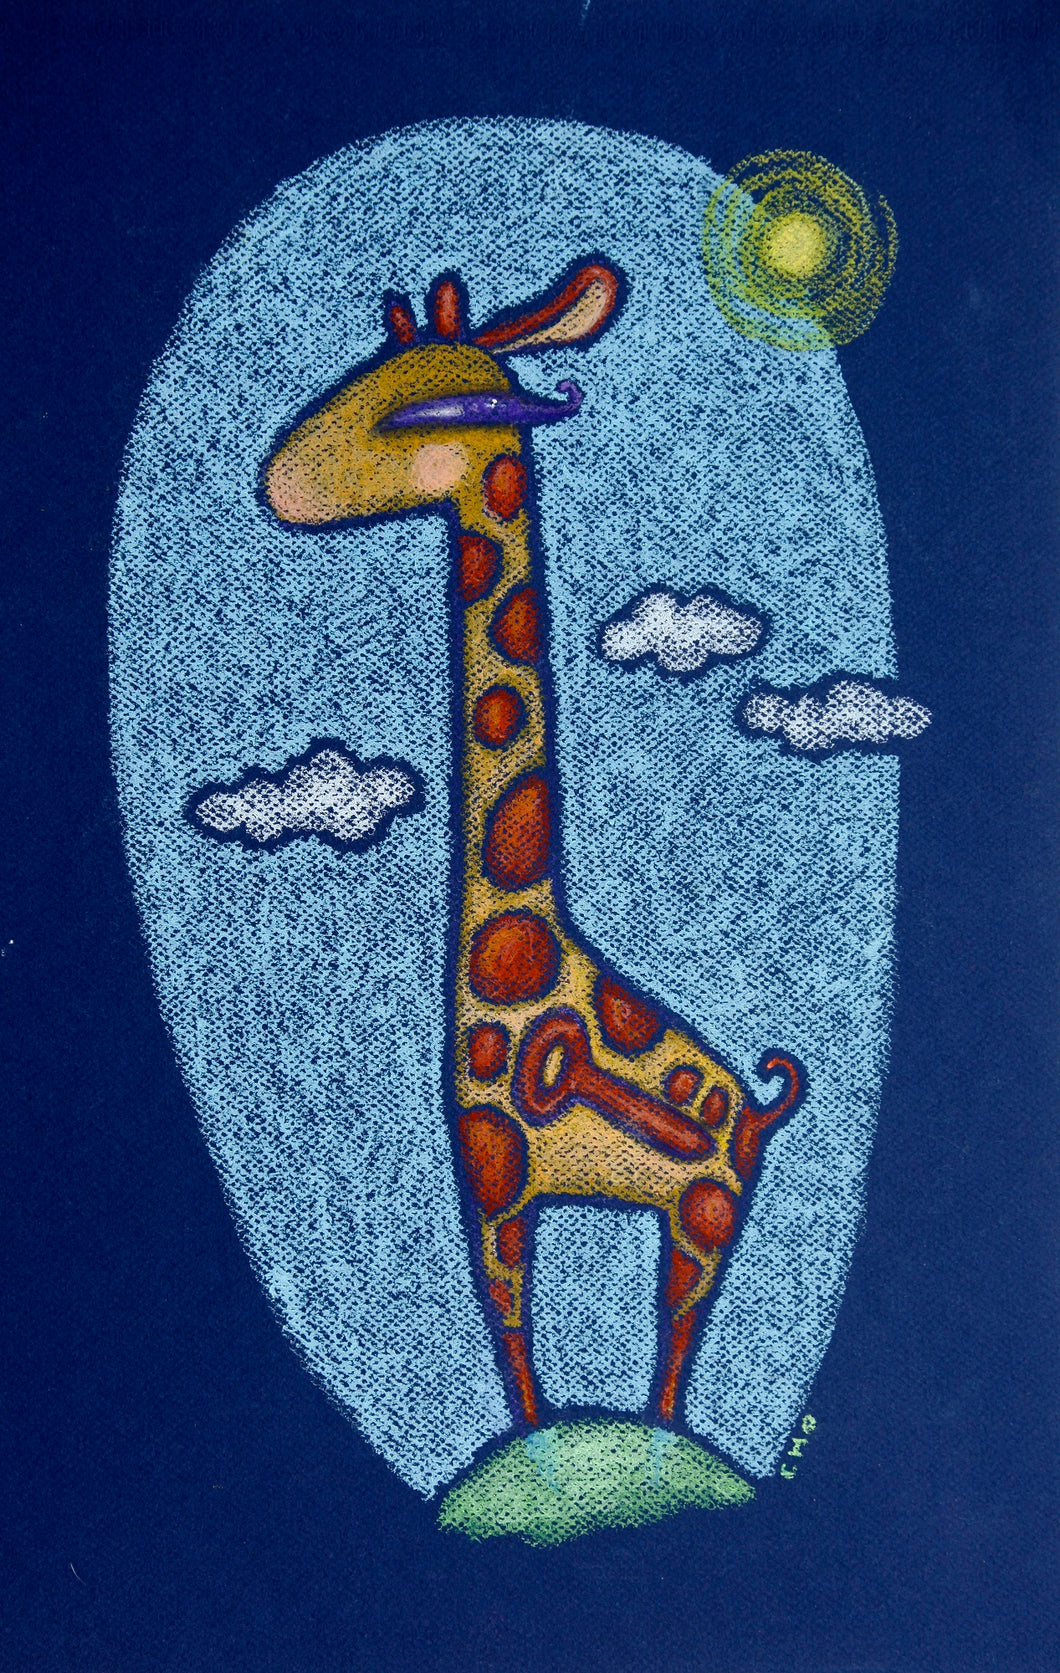 the key | giraffe | canvas print | framed 4x6 print